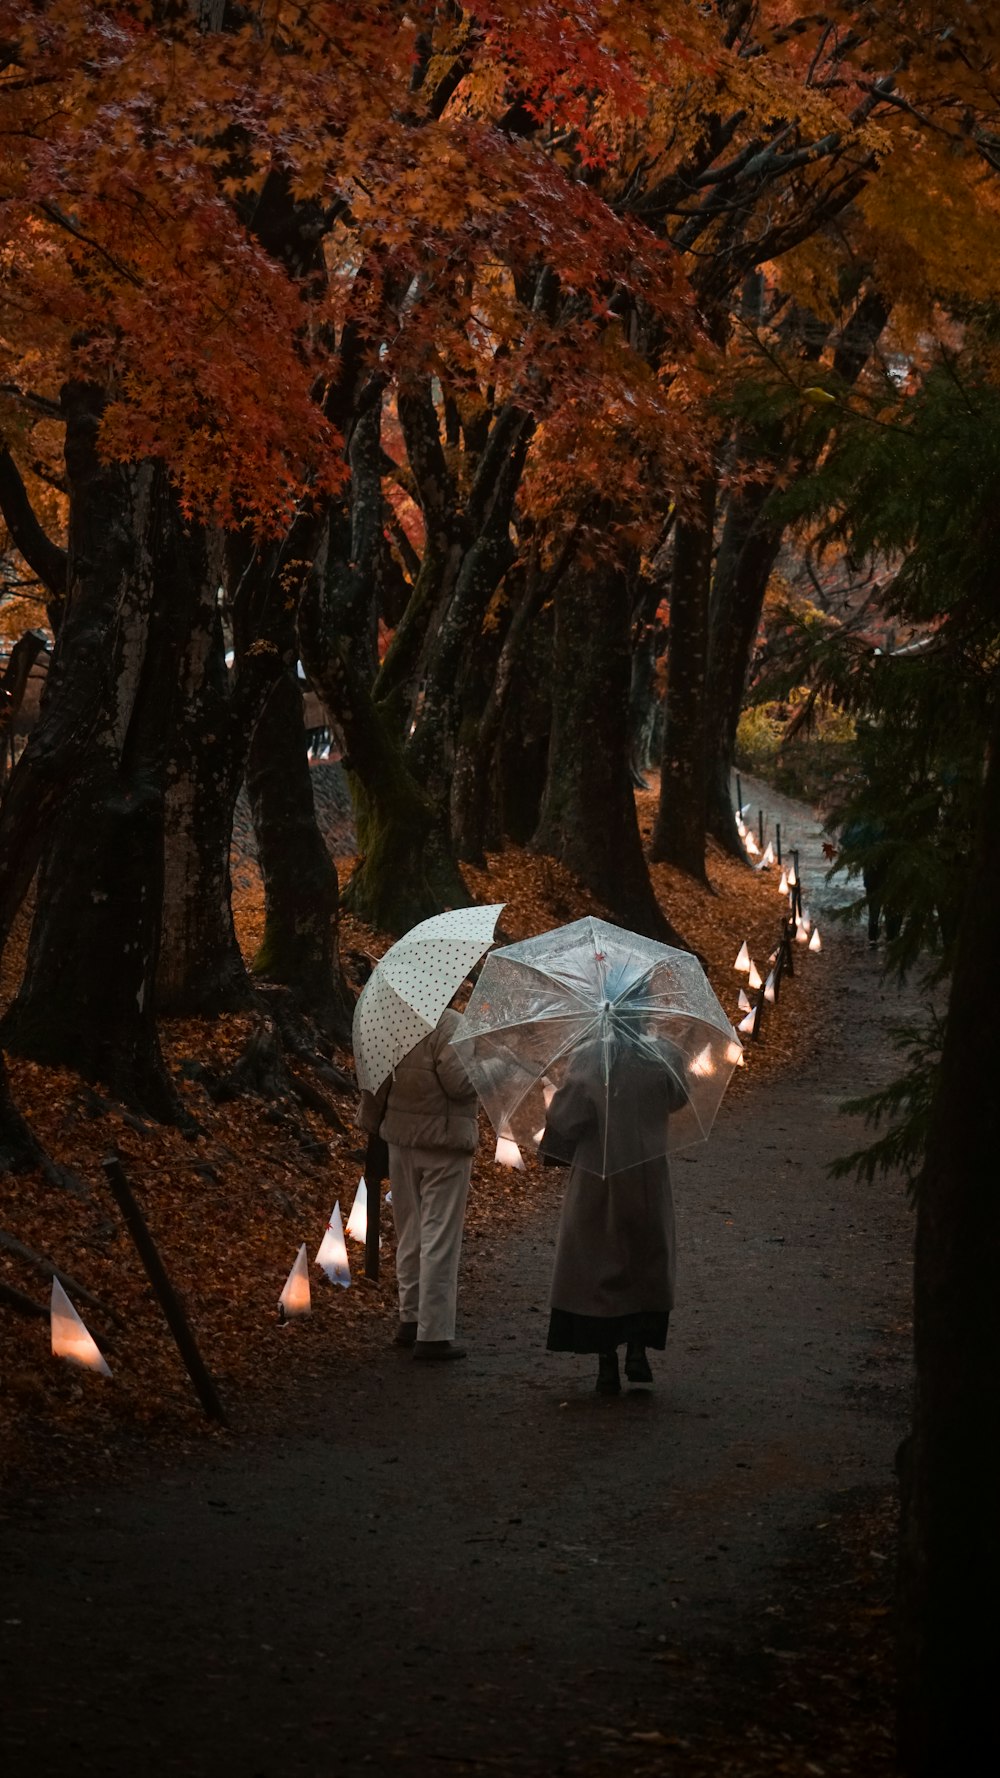 a couple walking under an umbrella